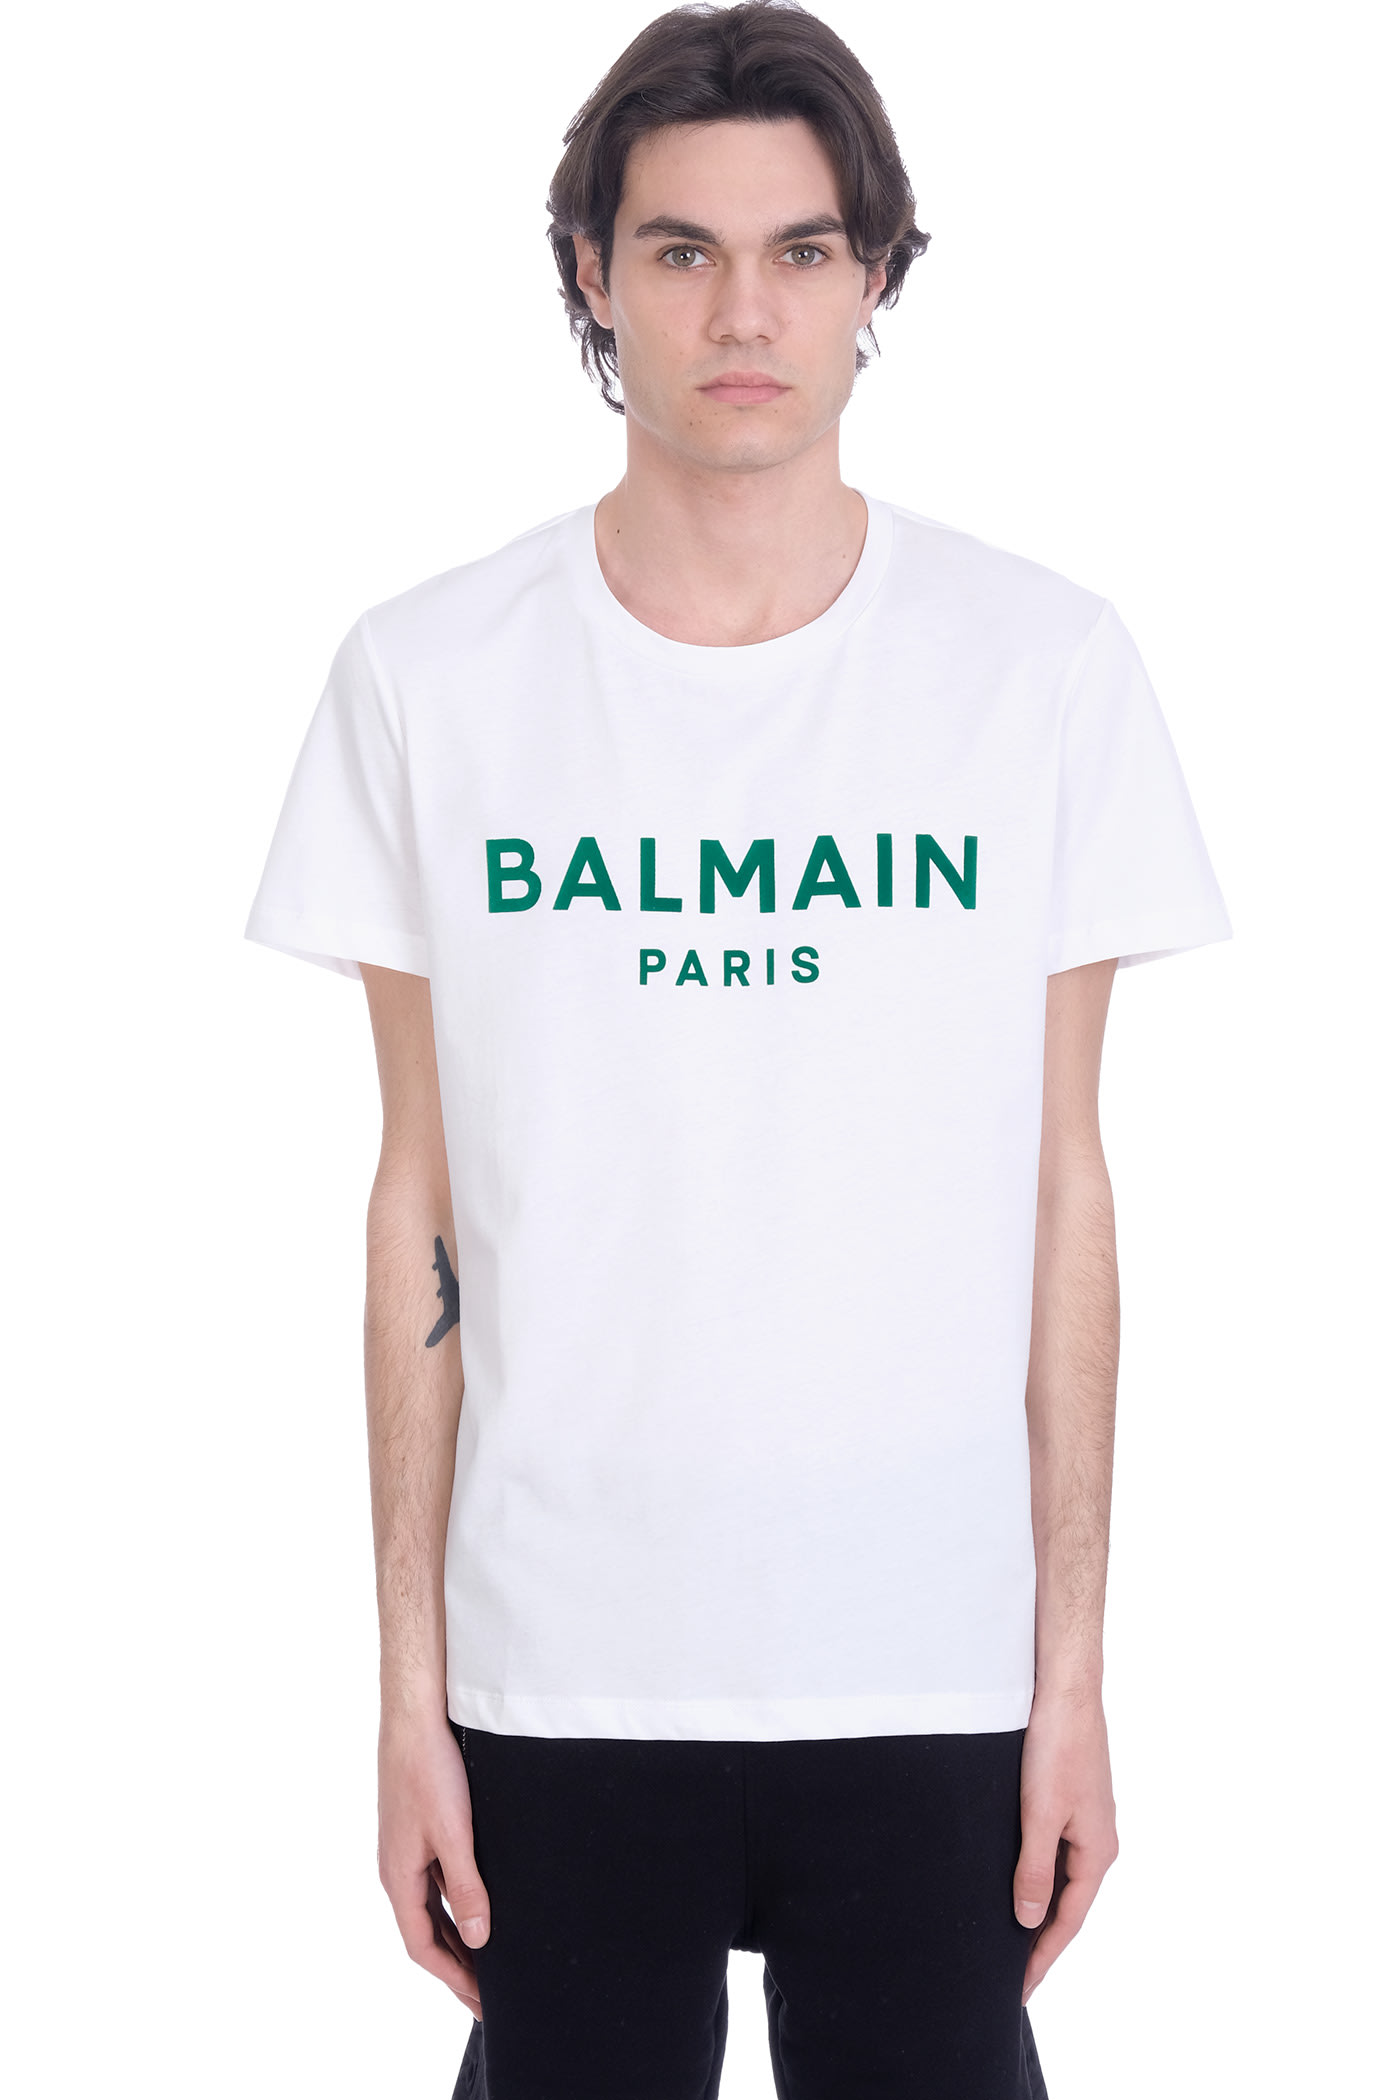 BALMAIN T-SHIRT IN WHITE COTTON,VH0EF000B043GFH